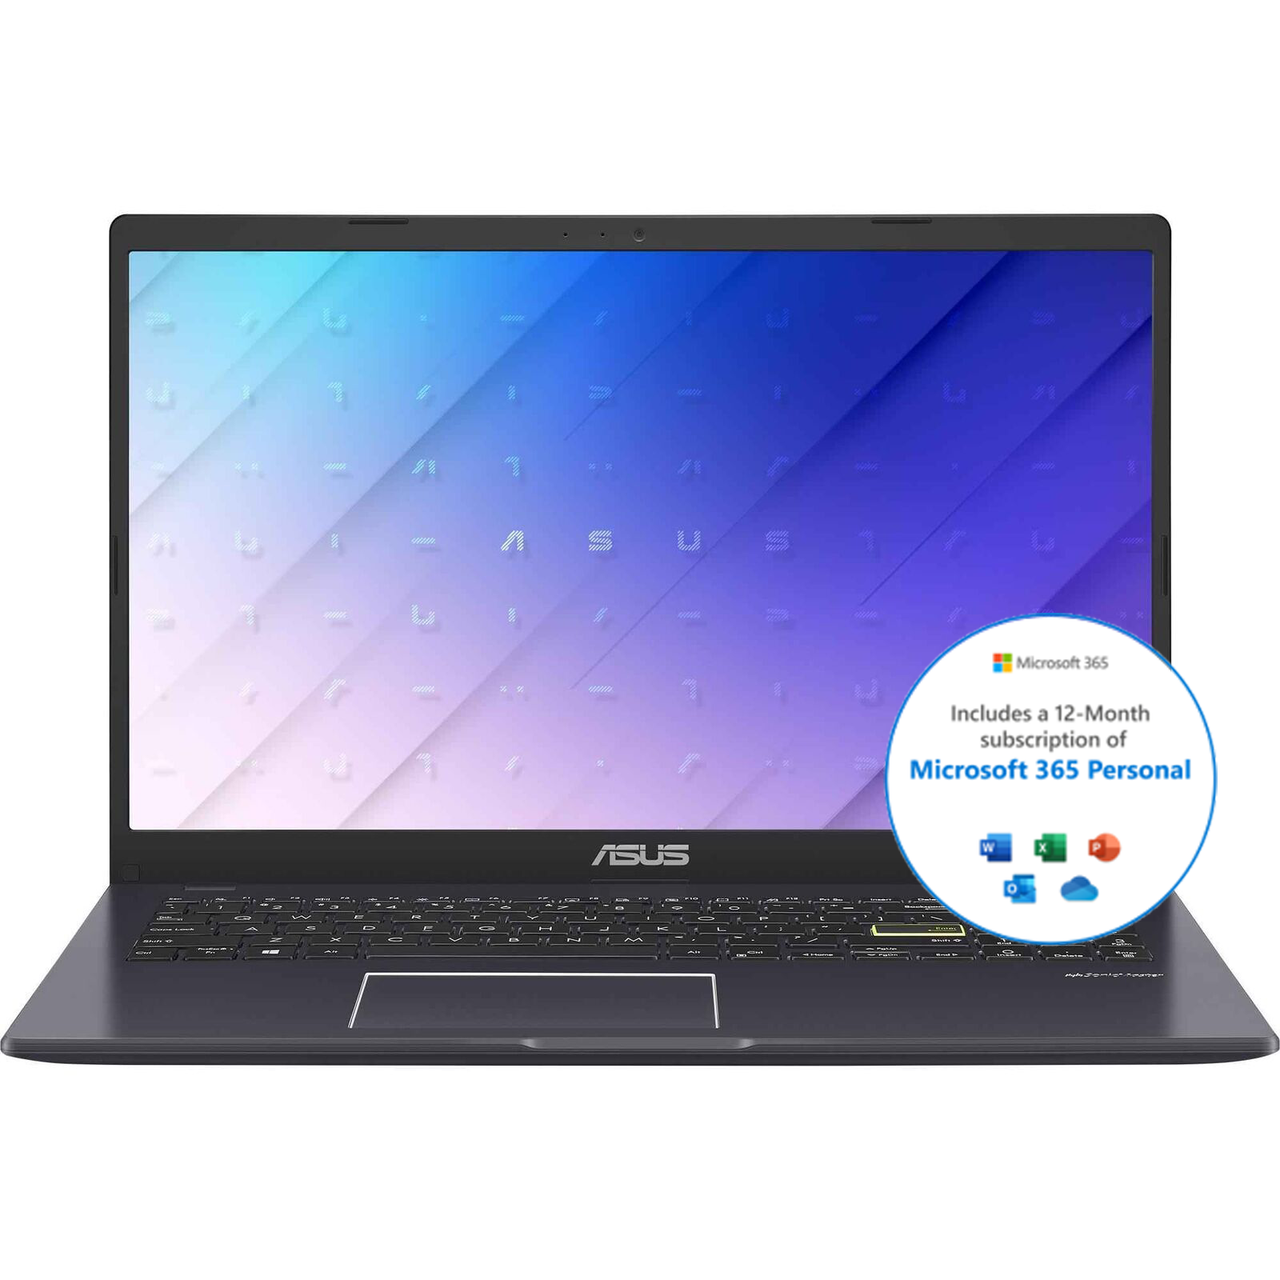 ASUS VivoBook 14 Laptop, Intel Pentium Processor, 4GB RAM, 128GB SSD, 14  Full HD, Black